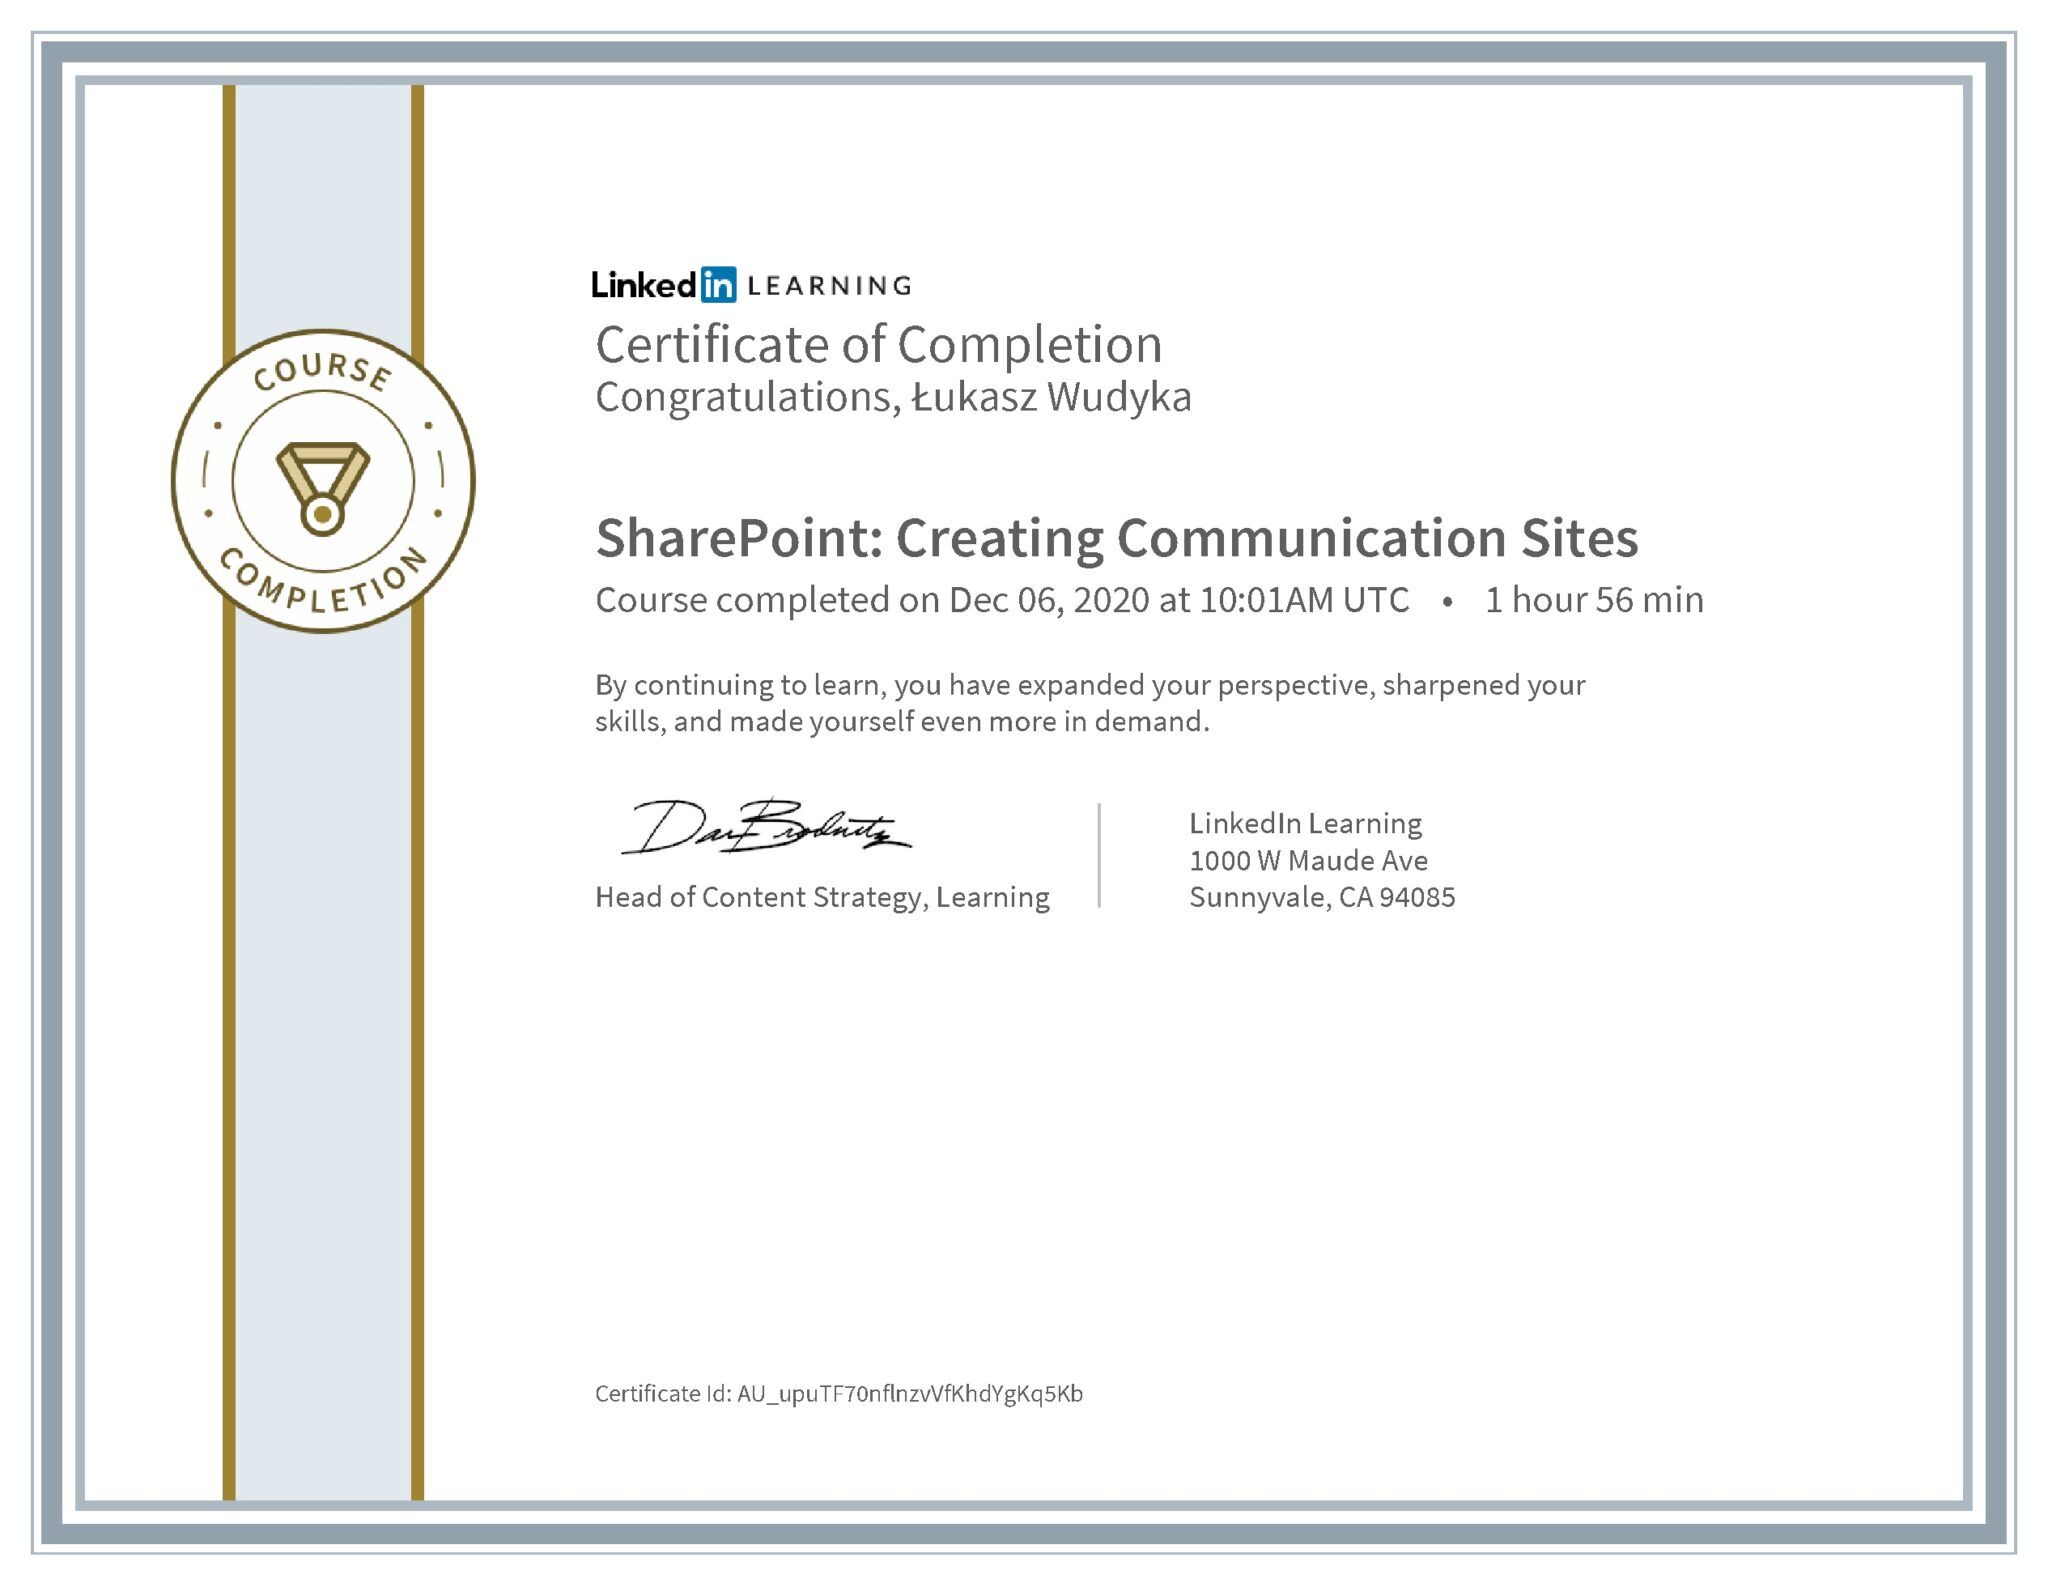 Łukasz Wudyka certyfikat LinkedIn SharePoint: Creating Communication Sites